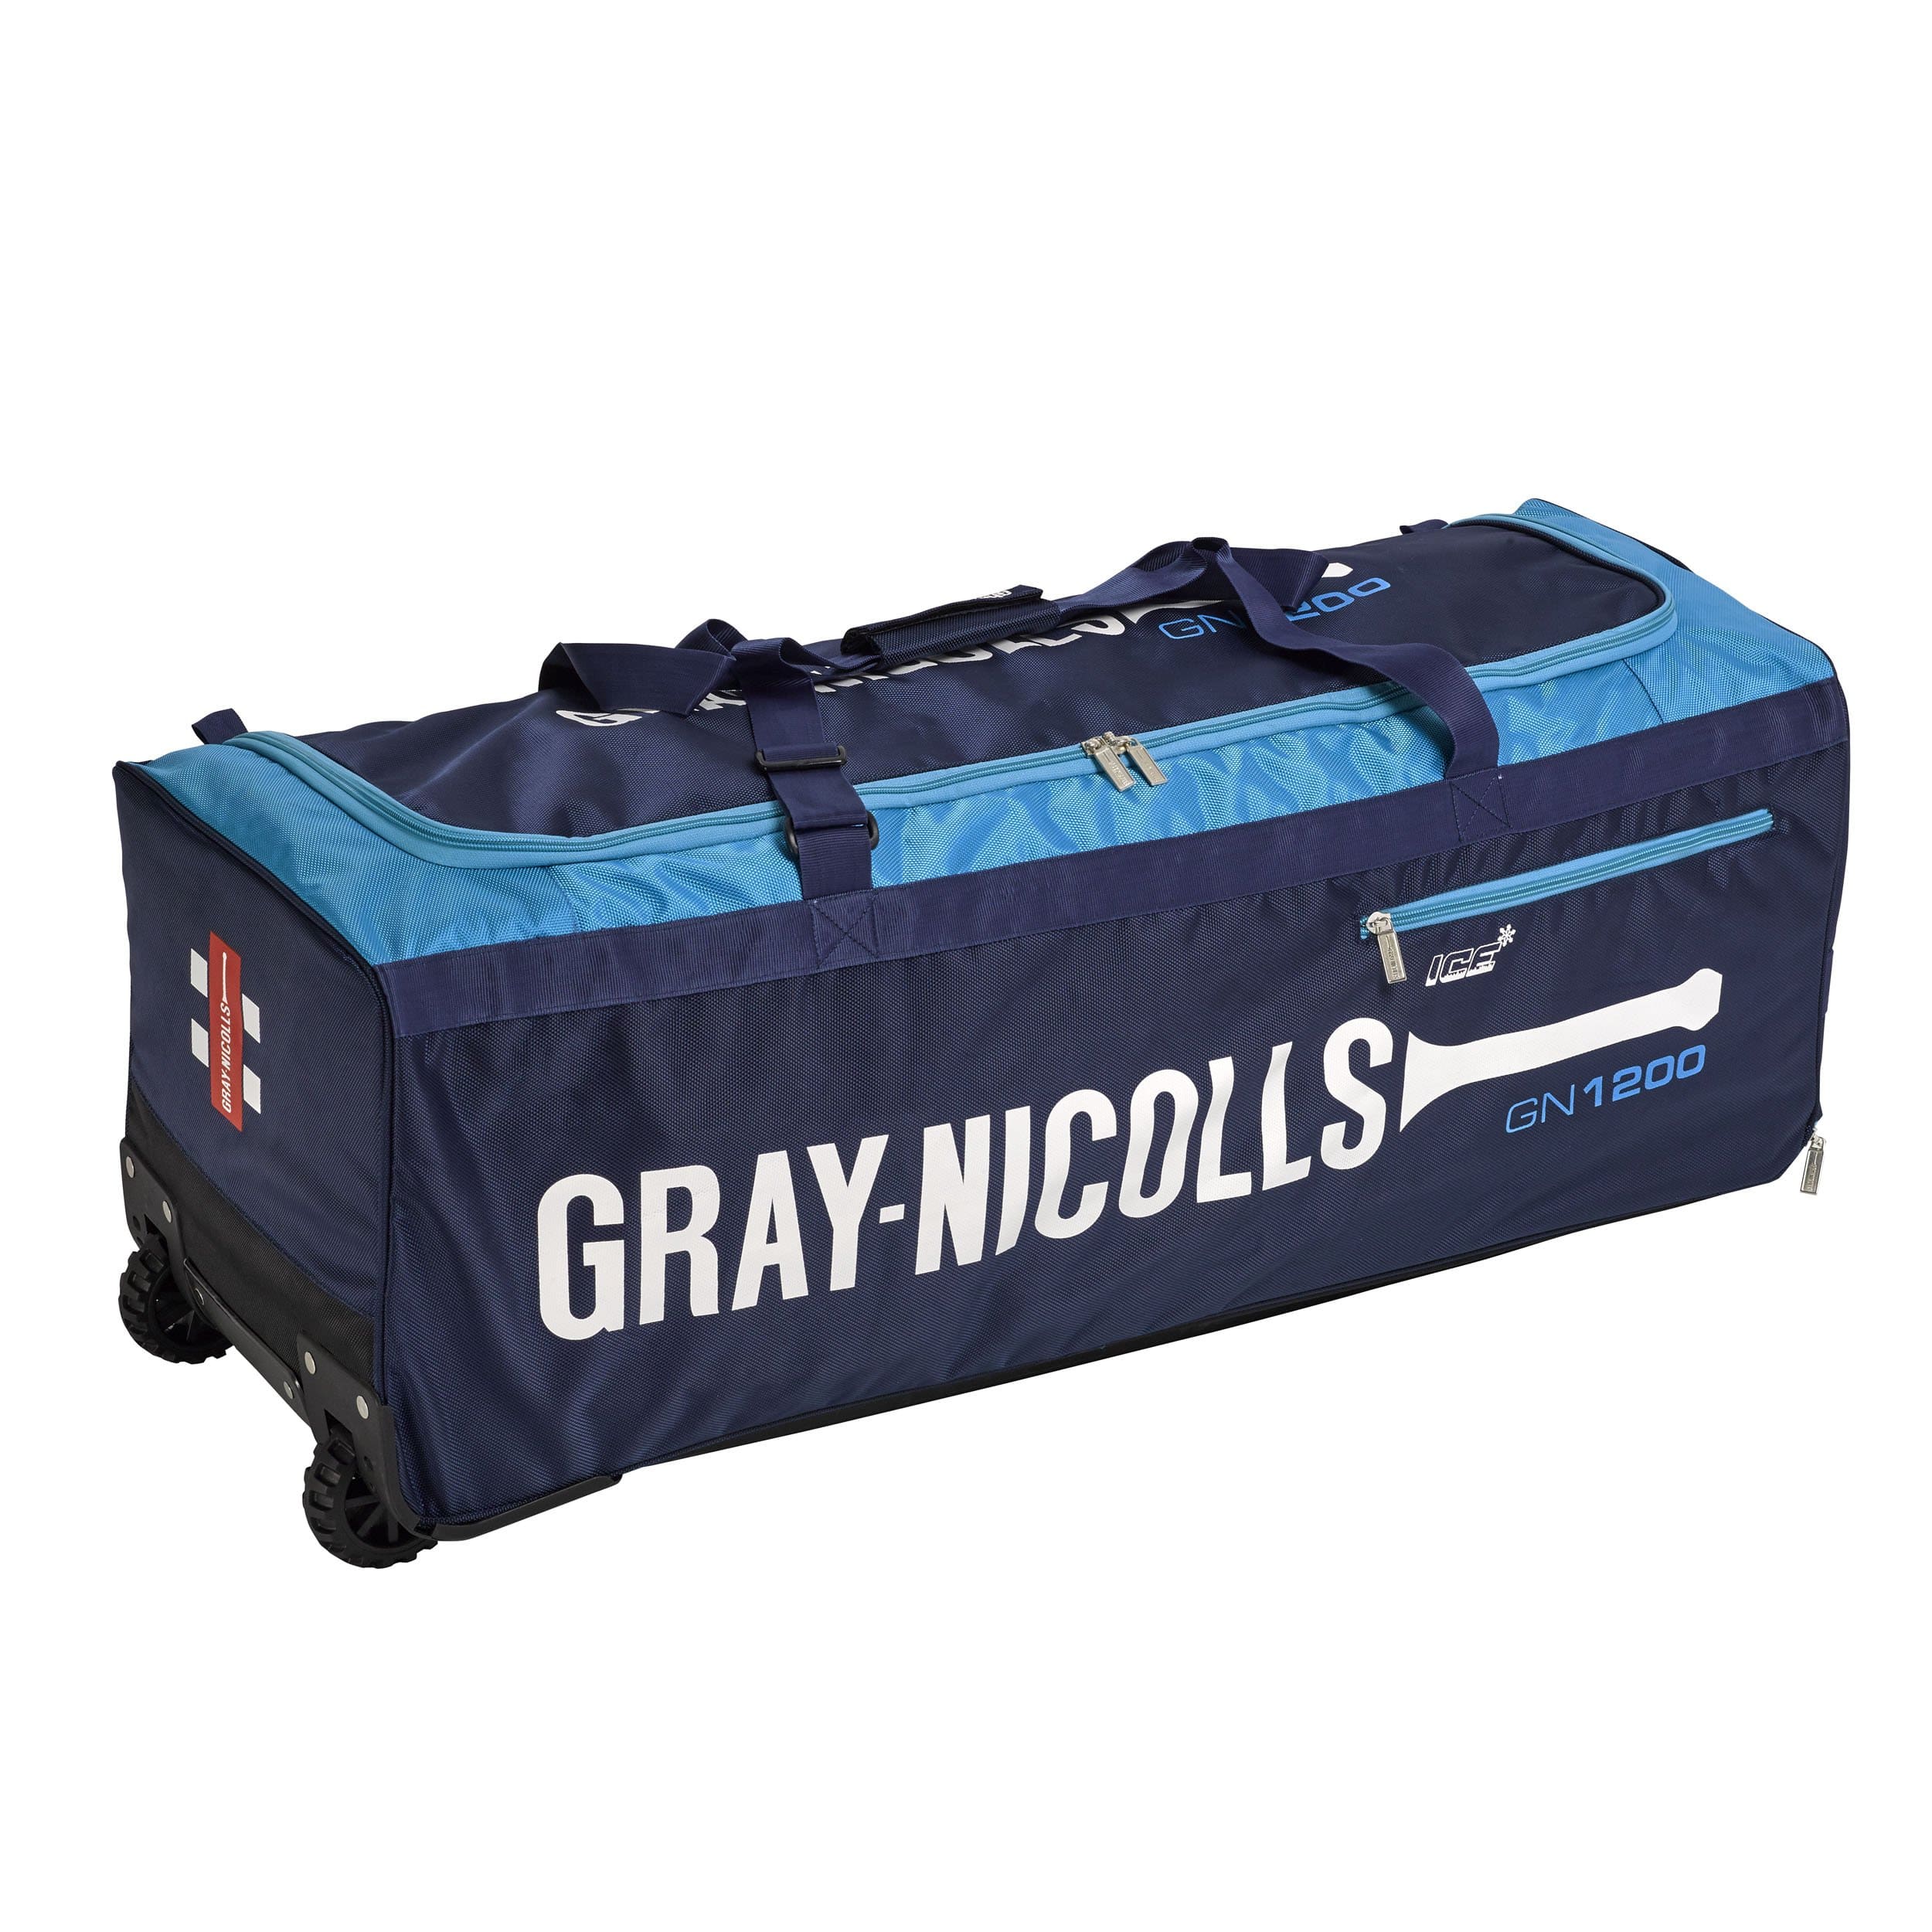 Gray Nicolls Cricket Bags Blue Gray Nicolls 1200 Wheel Cricket Bag